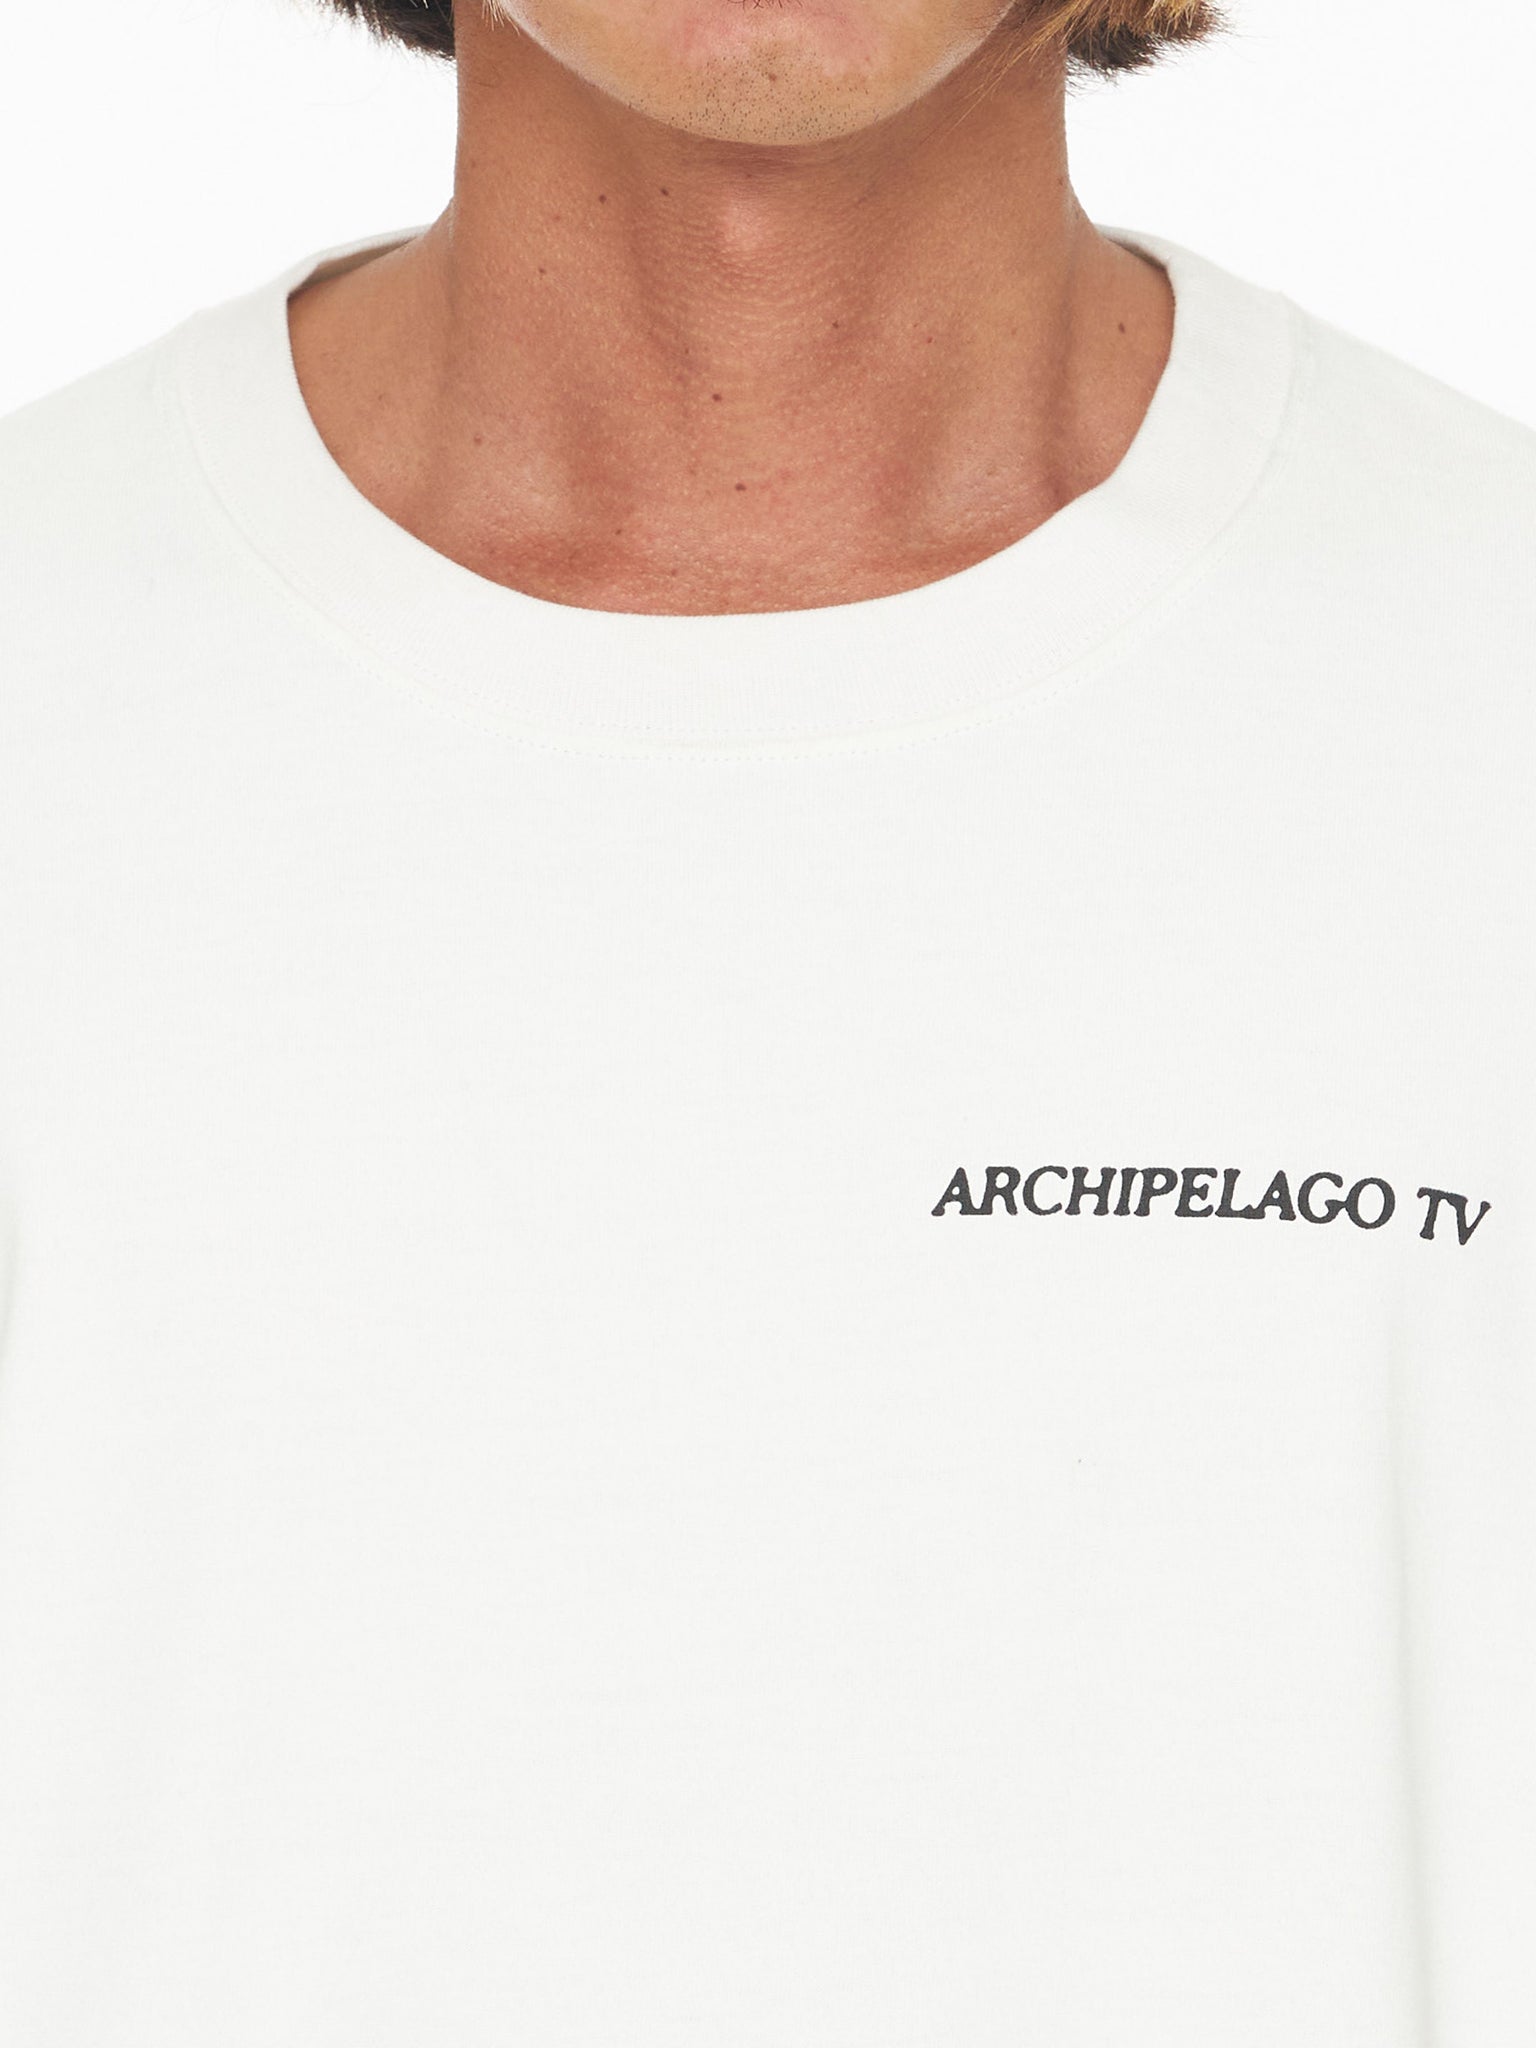 ARCHIPELAGO TV GLOBE WHITE - LONG SLEEVE